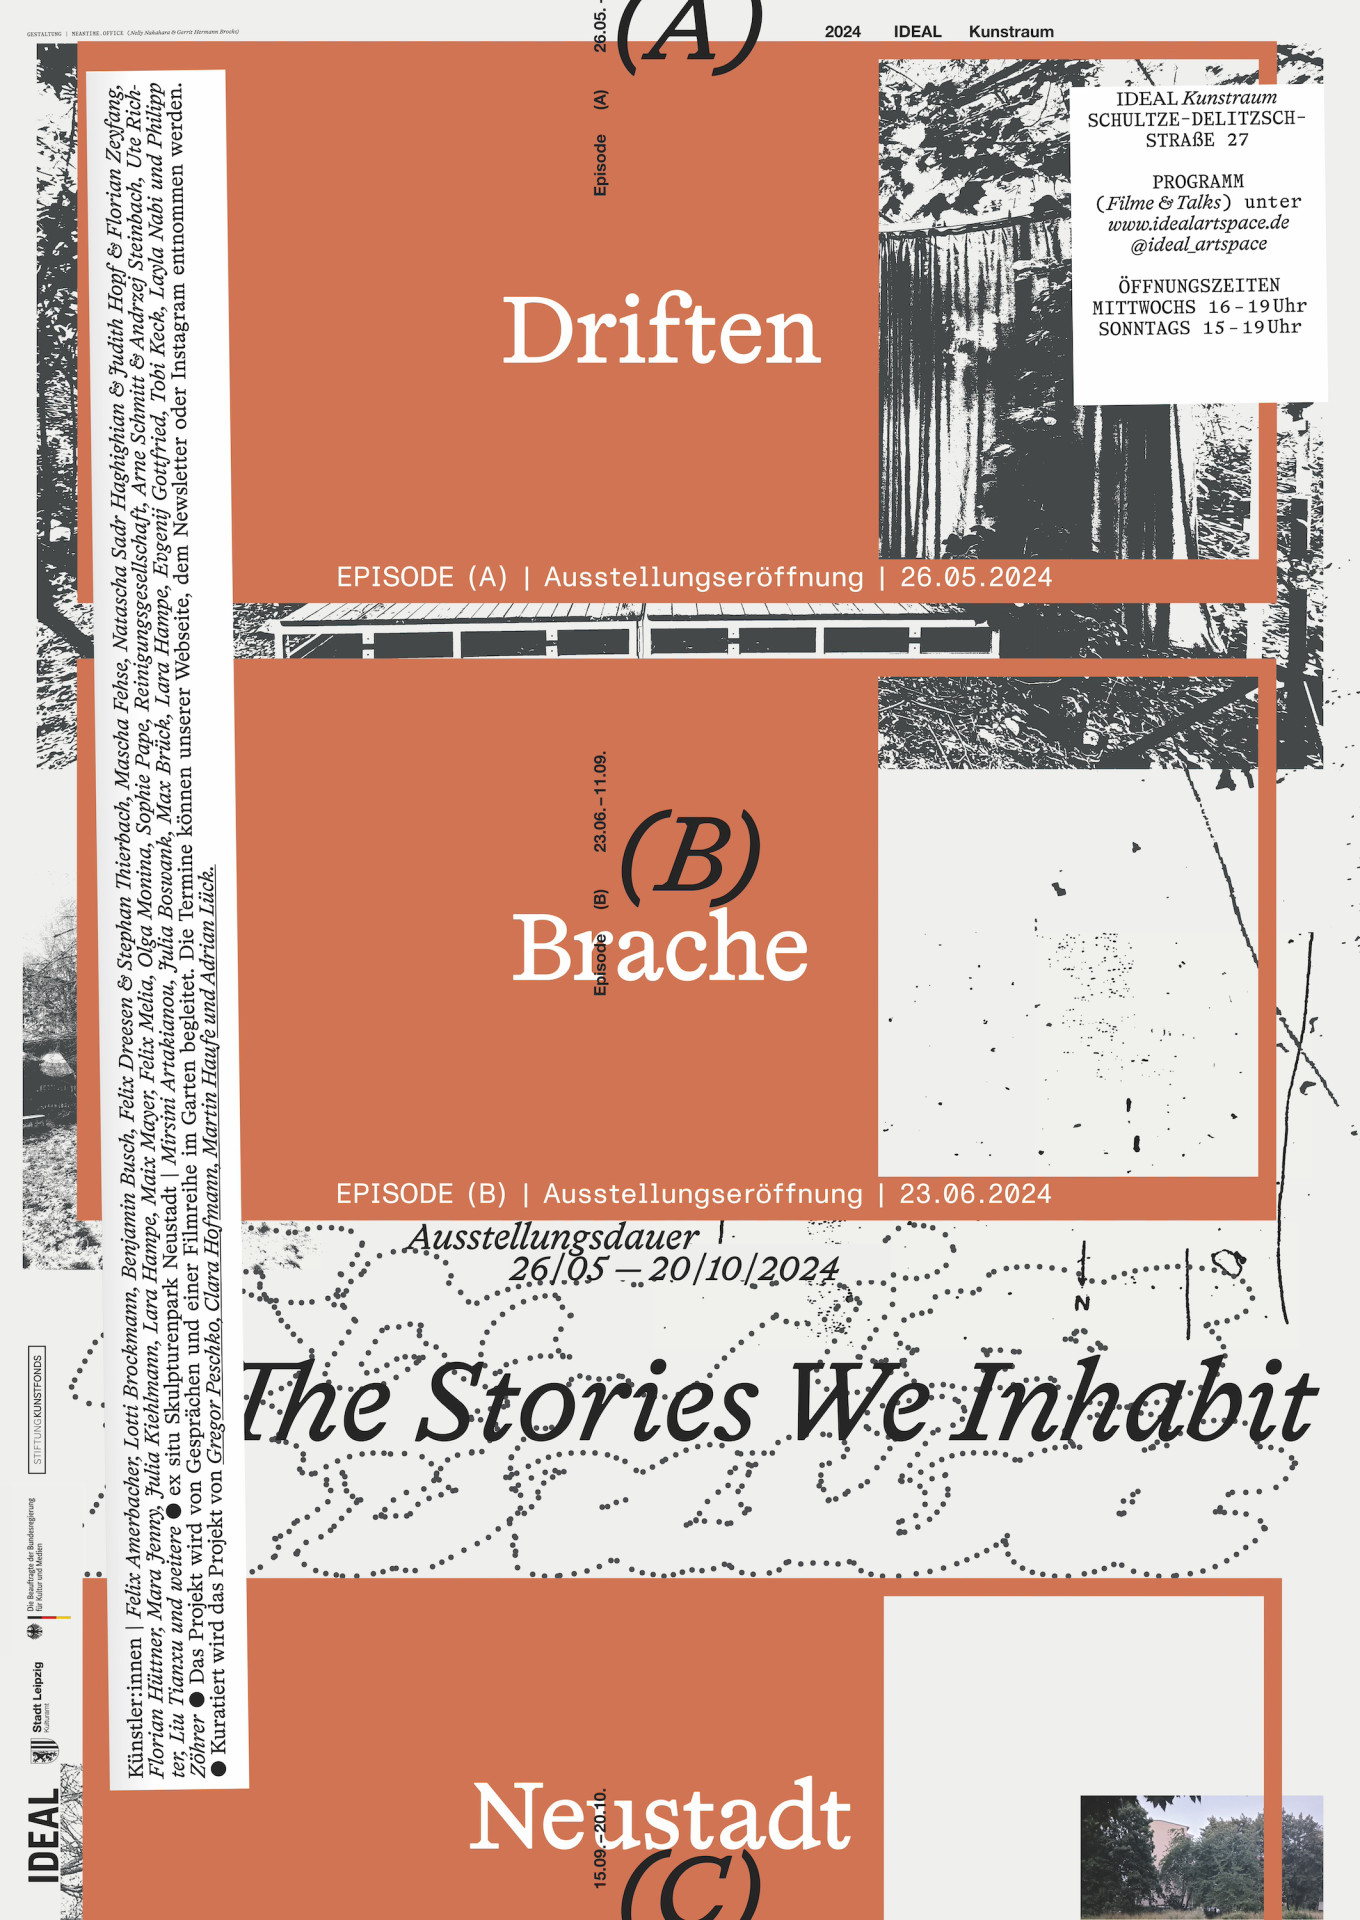 The Stories We Inhabit. Episode I: DRIFTEN